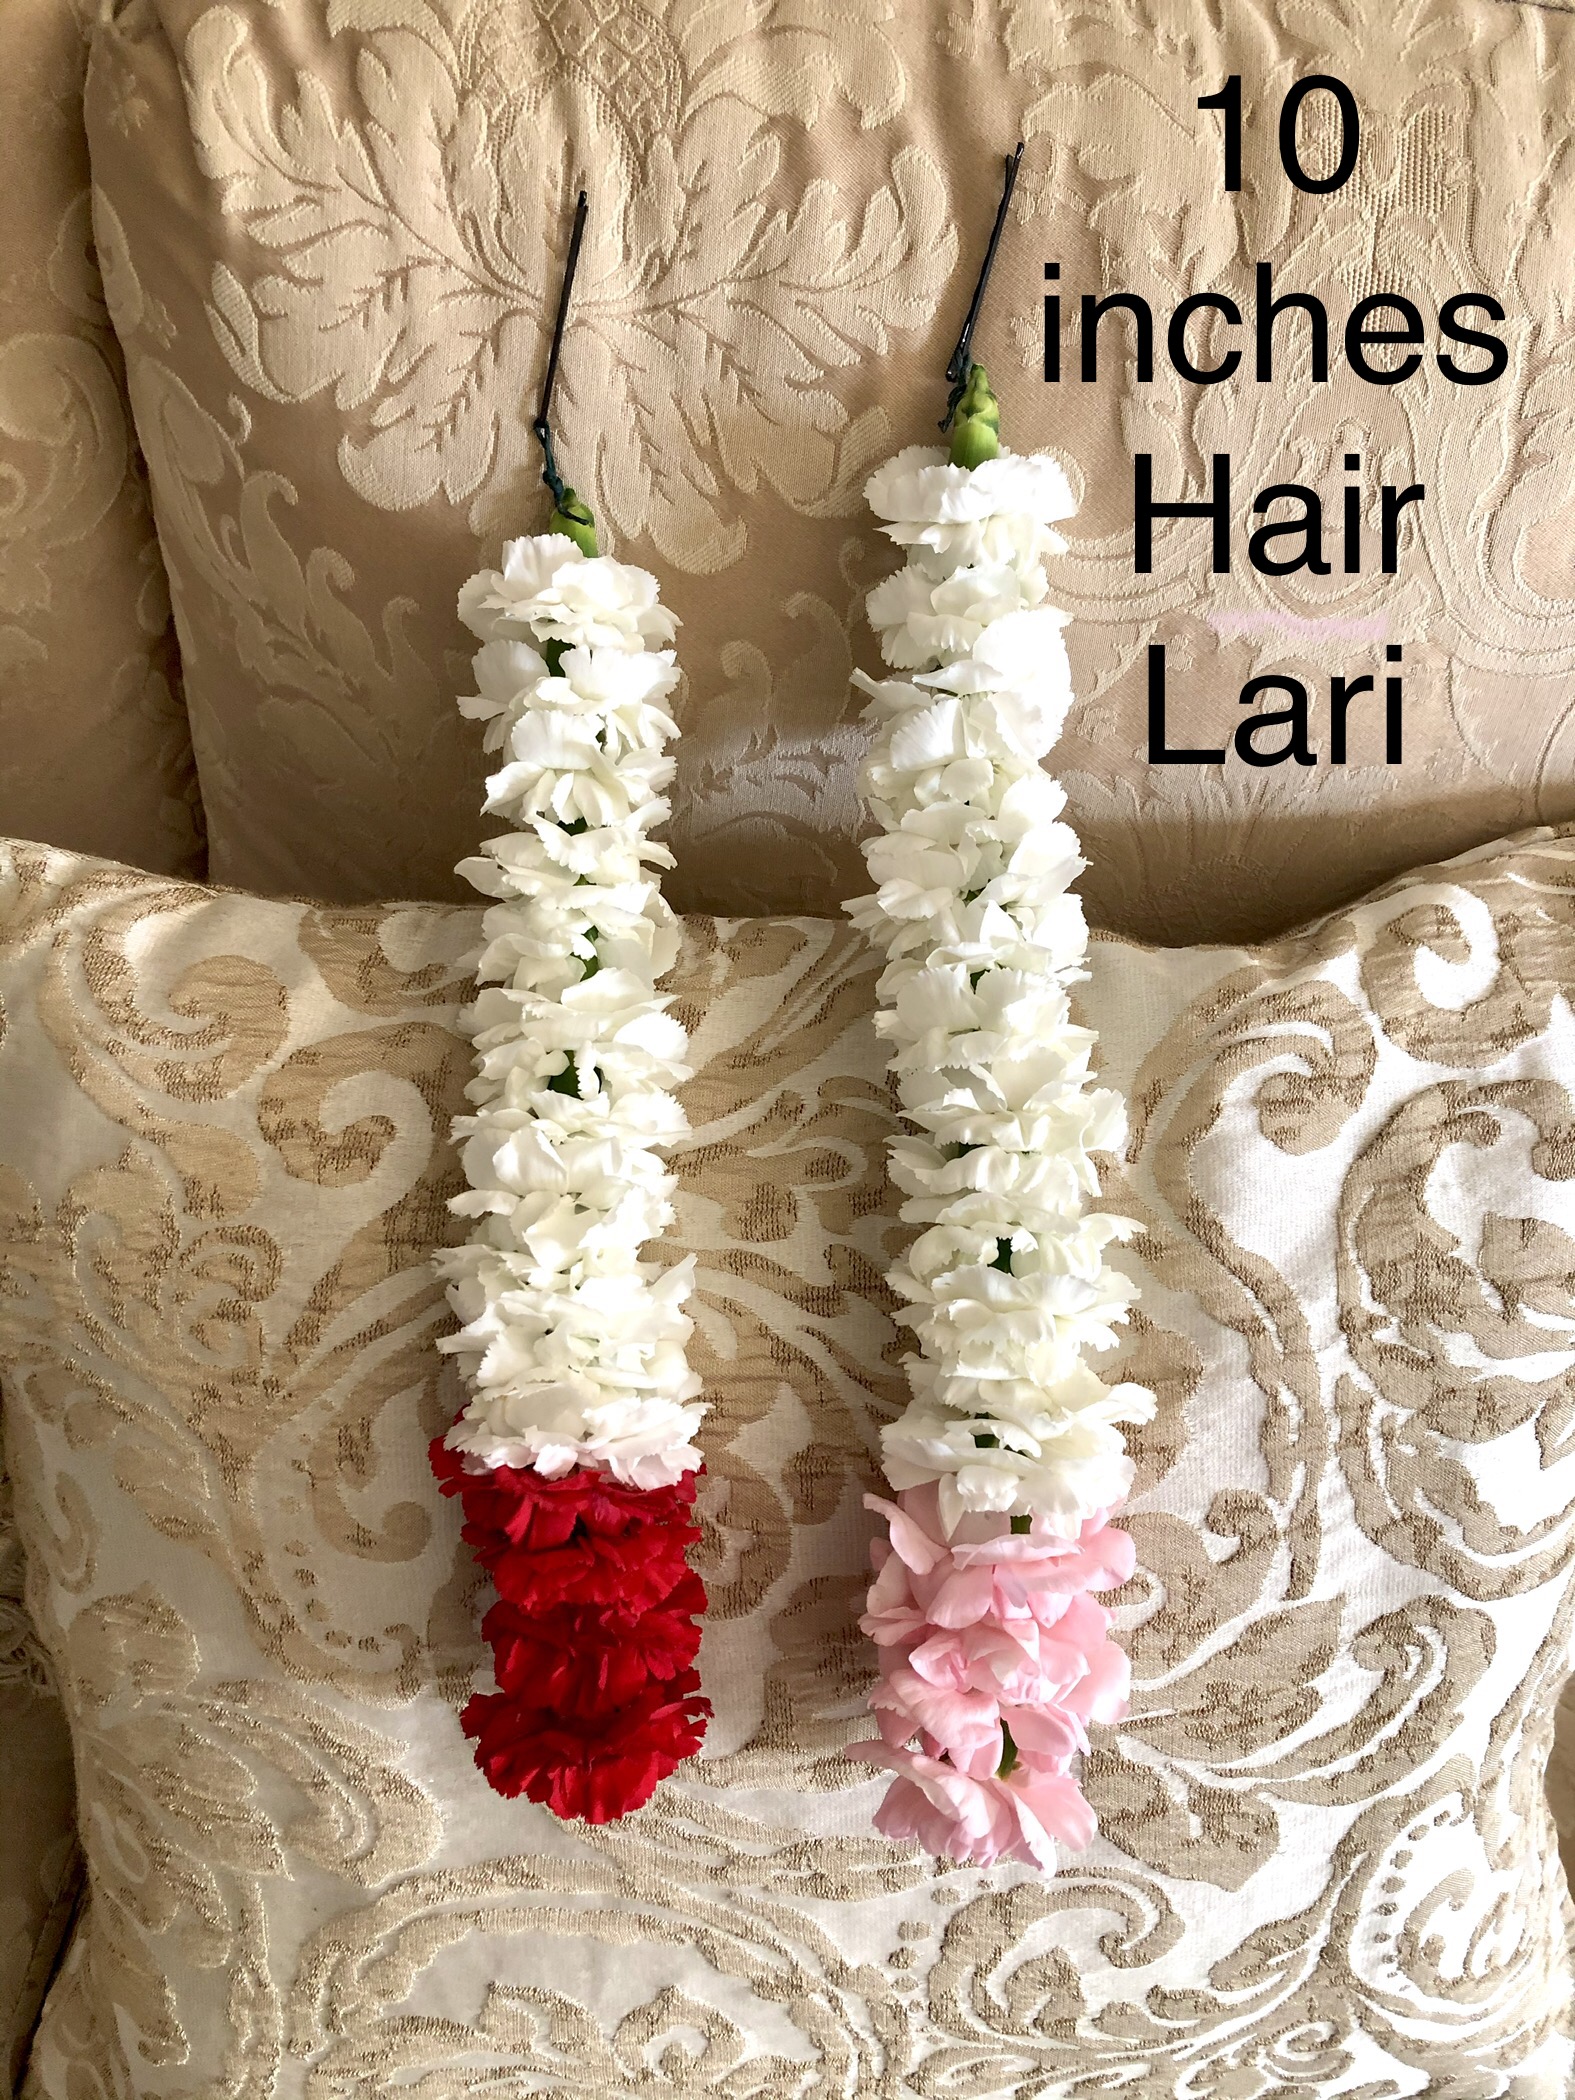 10 inches hair lari $15                                   